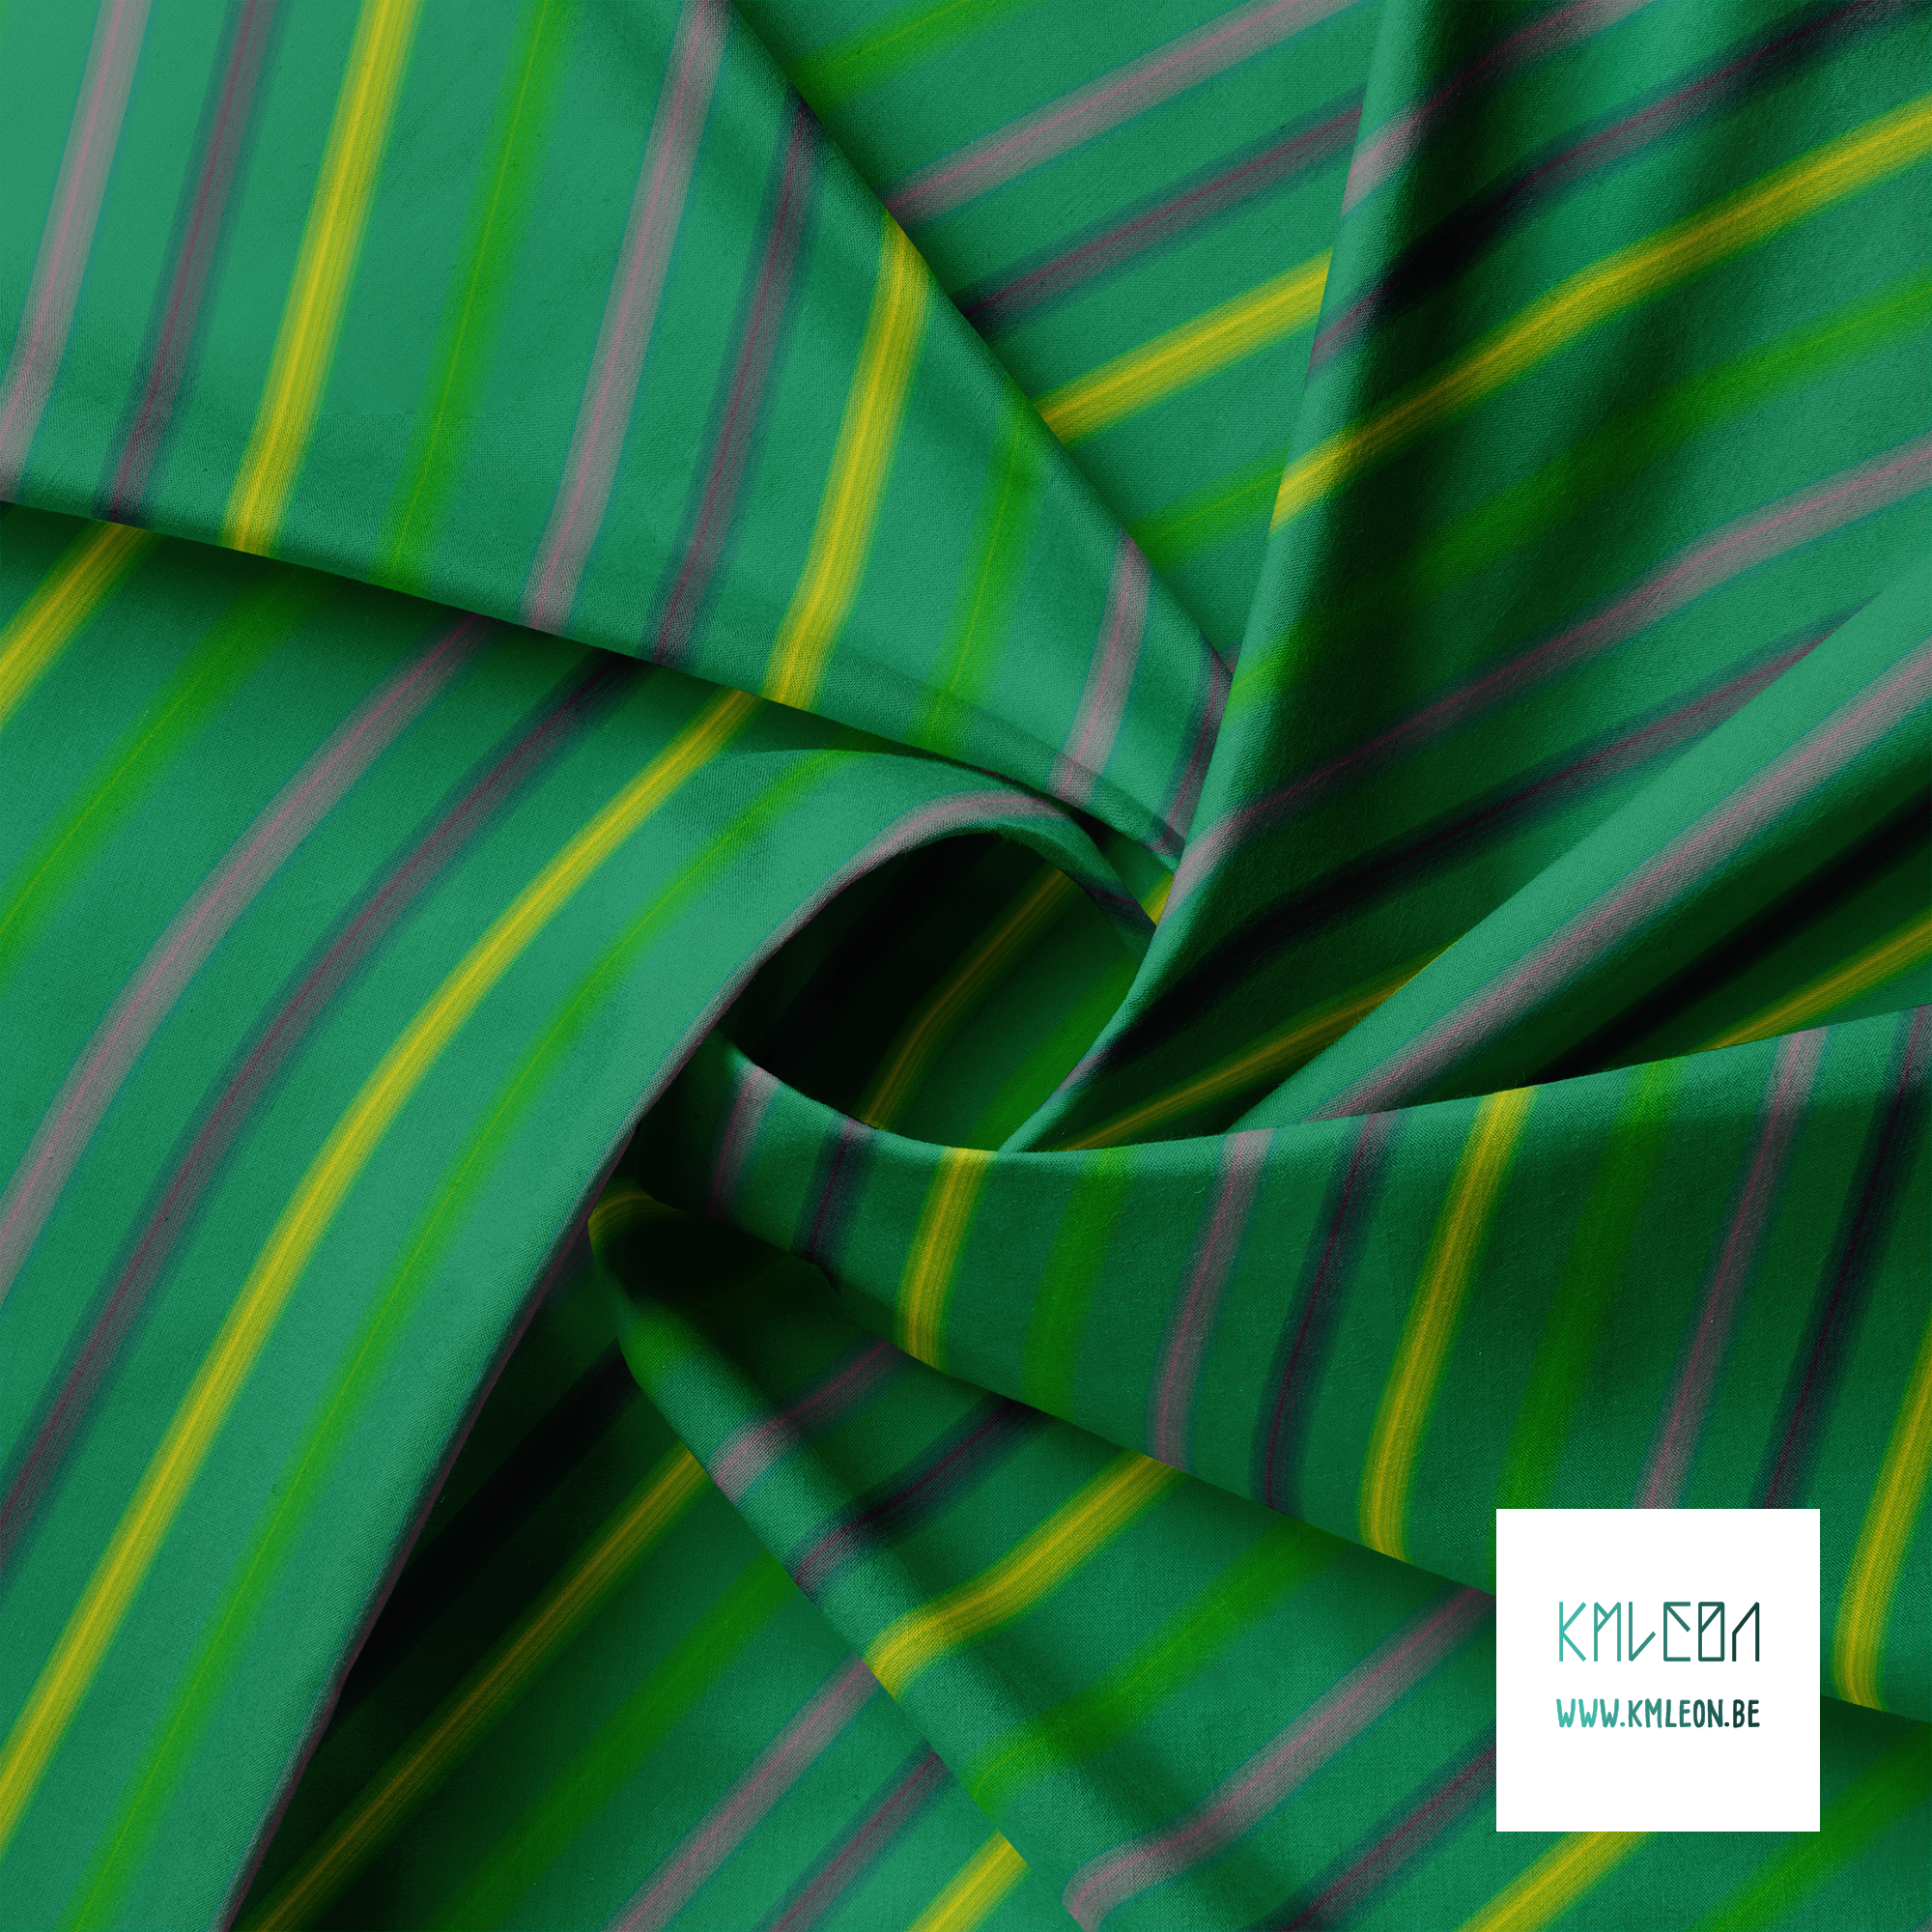 Zachte horizontale strepen in groen, geel, donkerblauw en roze stof